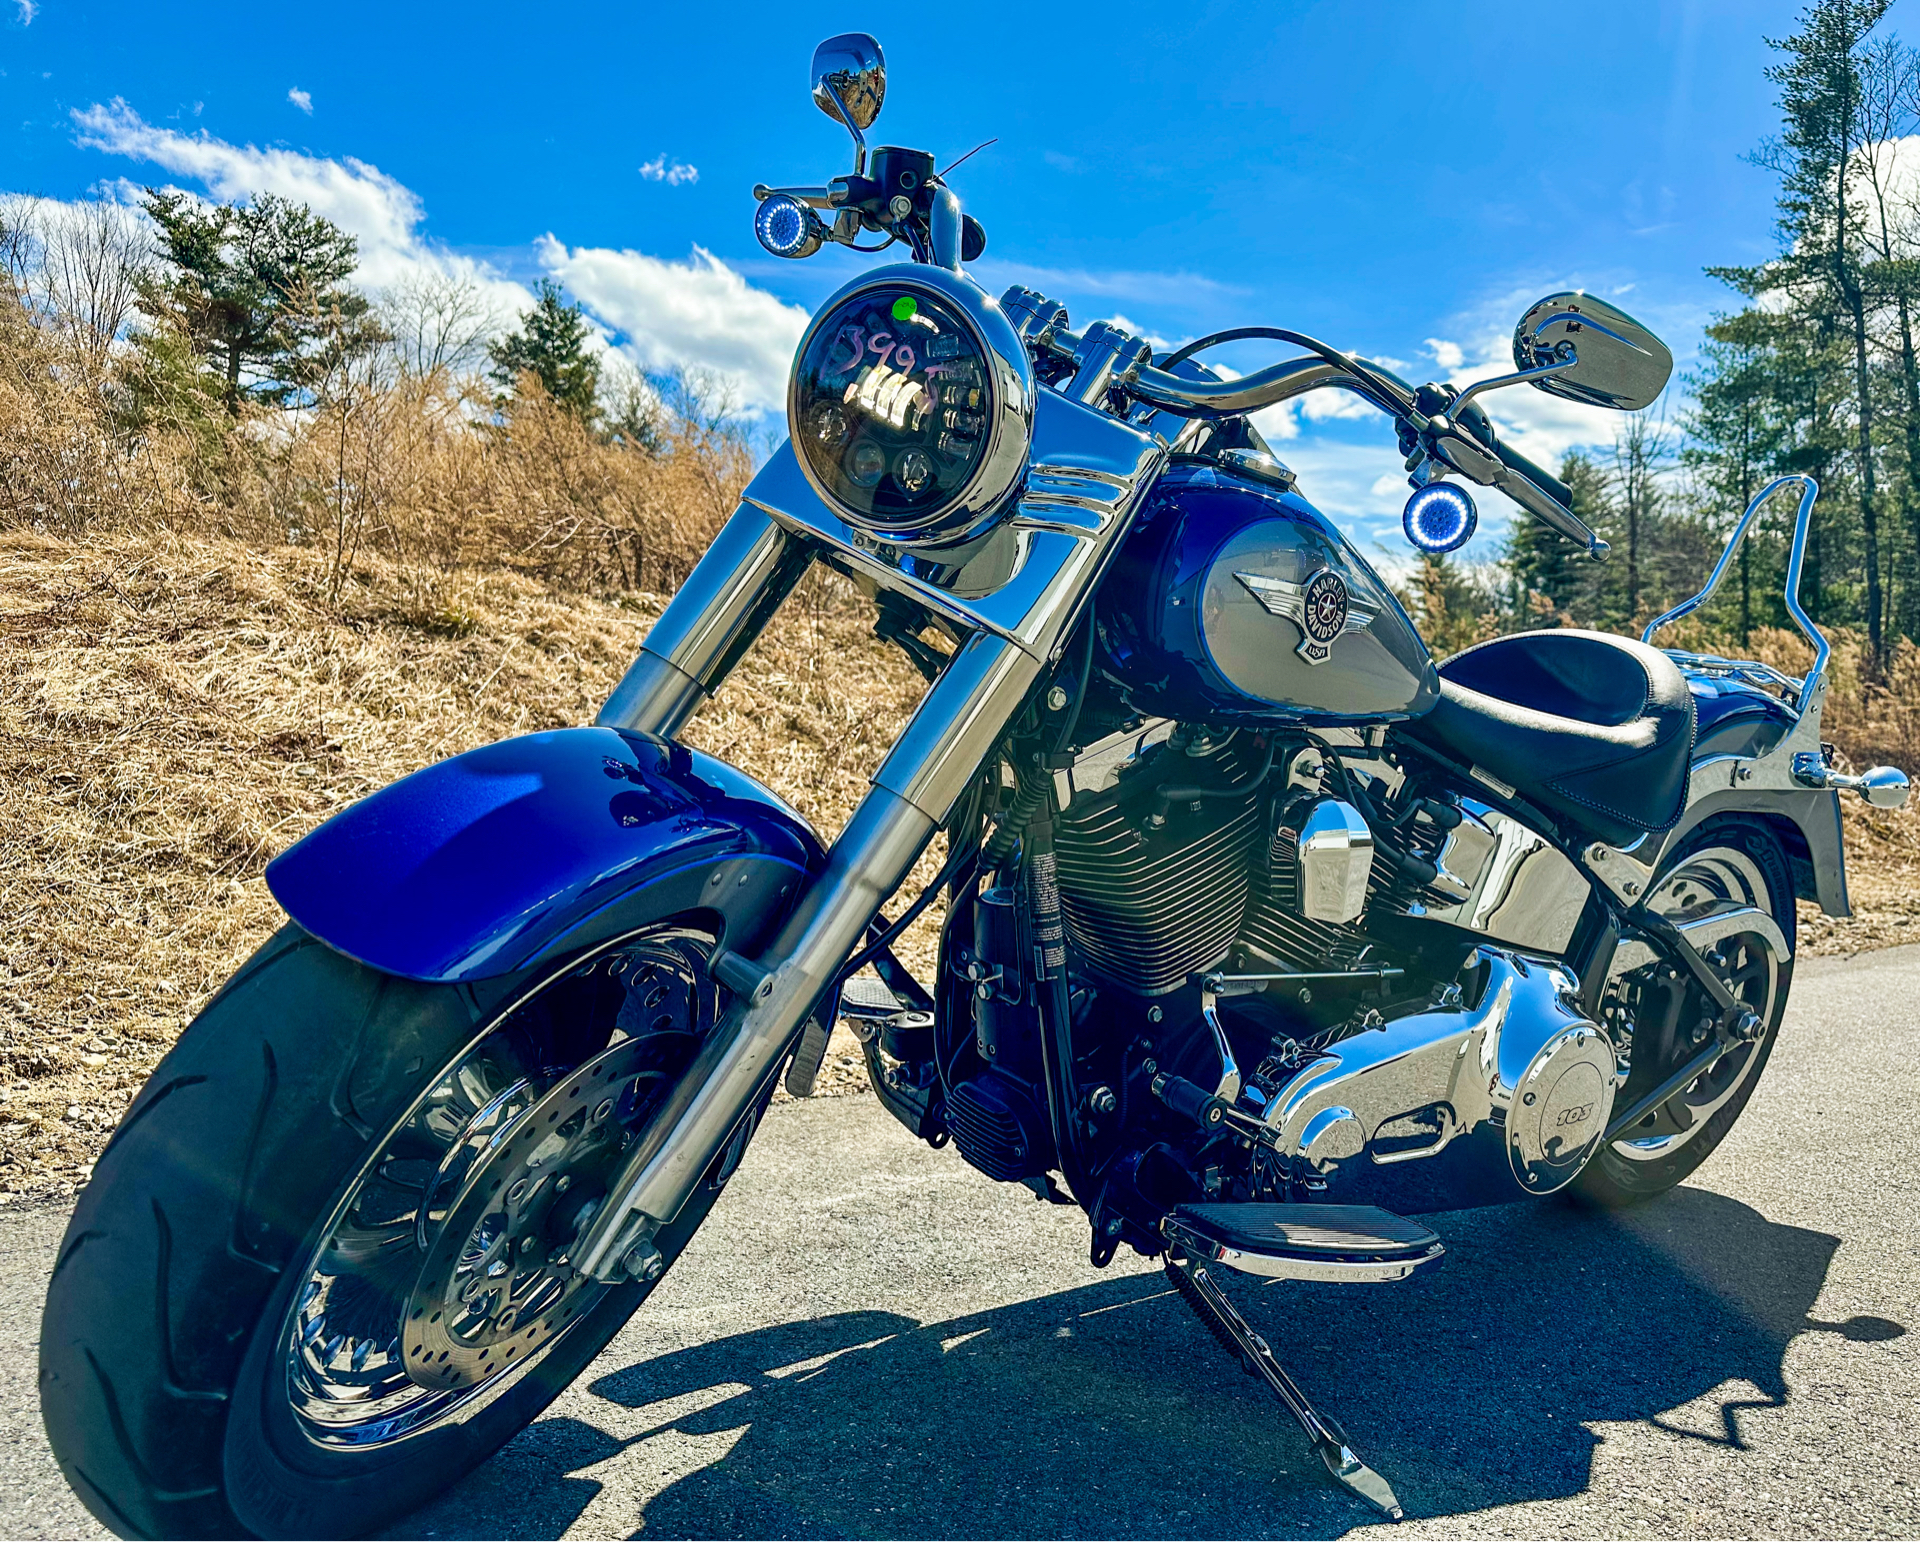 2017 Harley-Davidson Fat Boy® in Foxboro, Massachusetts - Photo 27